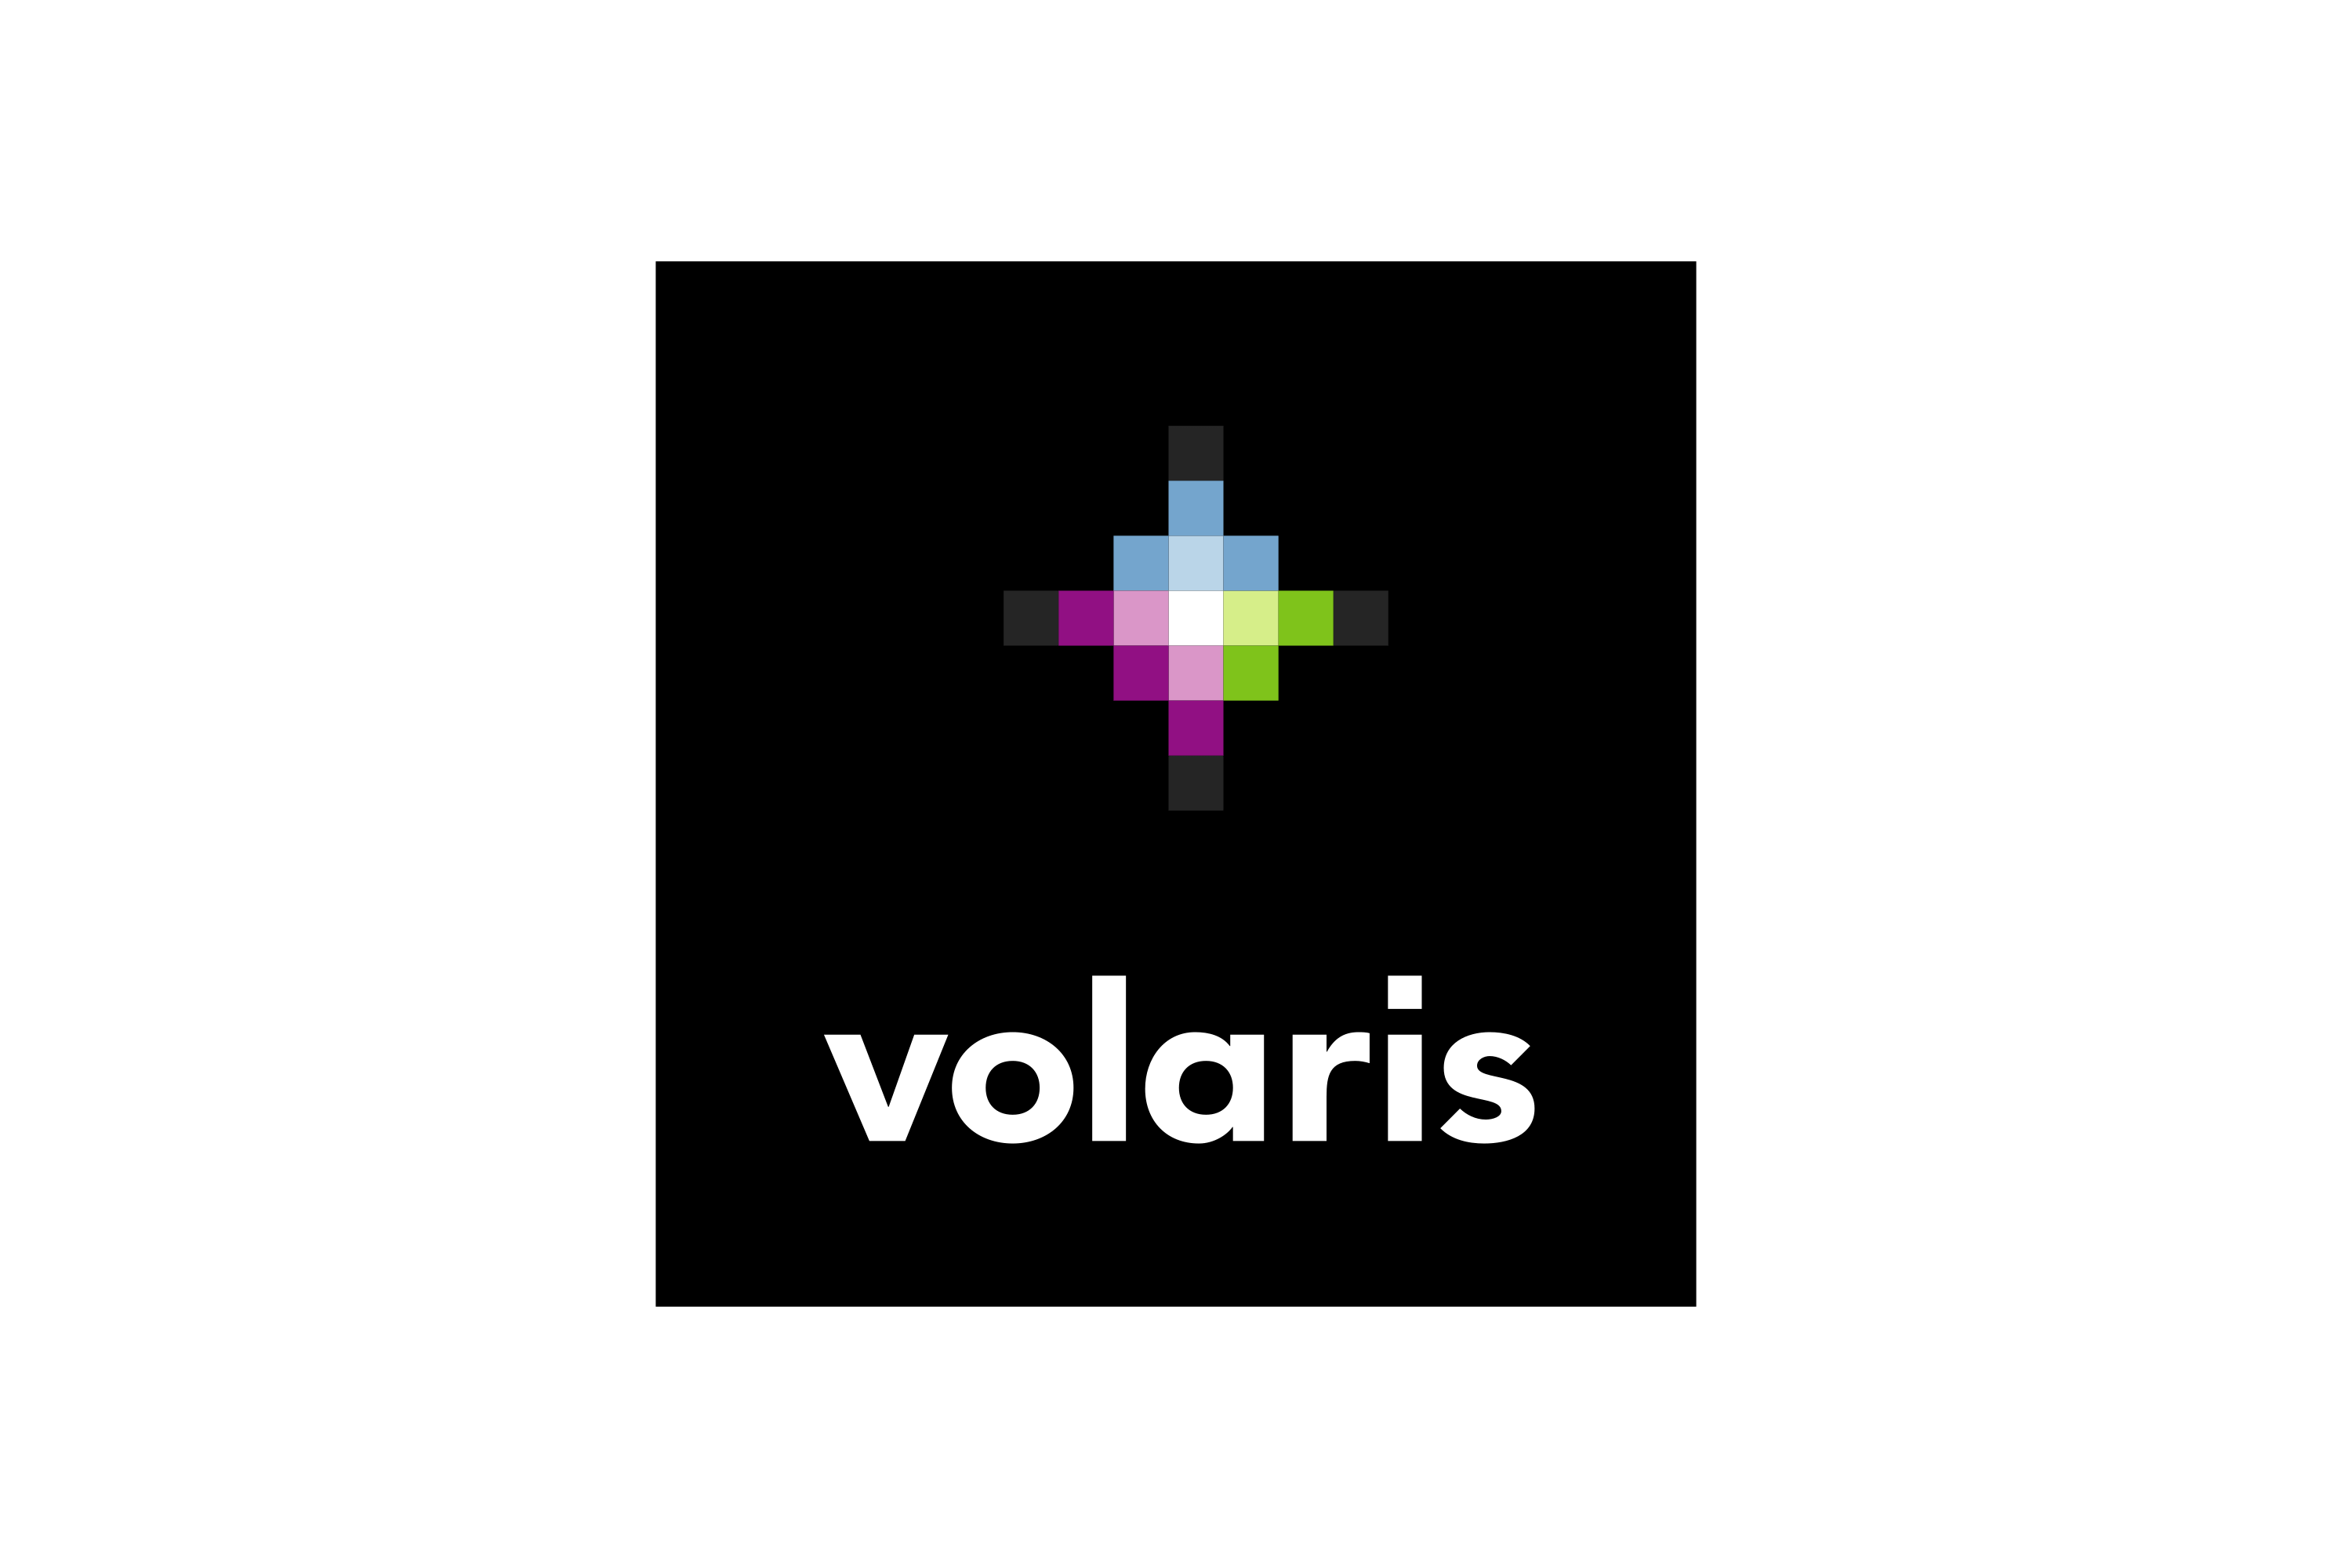 Download Volaris Logo in SVG Vector or PNG File Format - Logo.wine